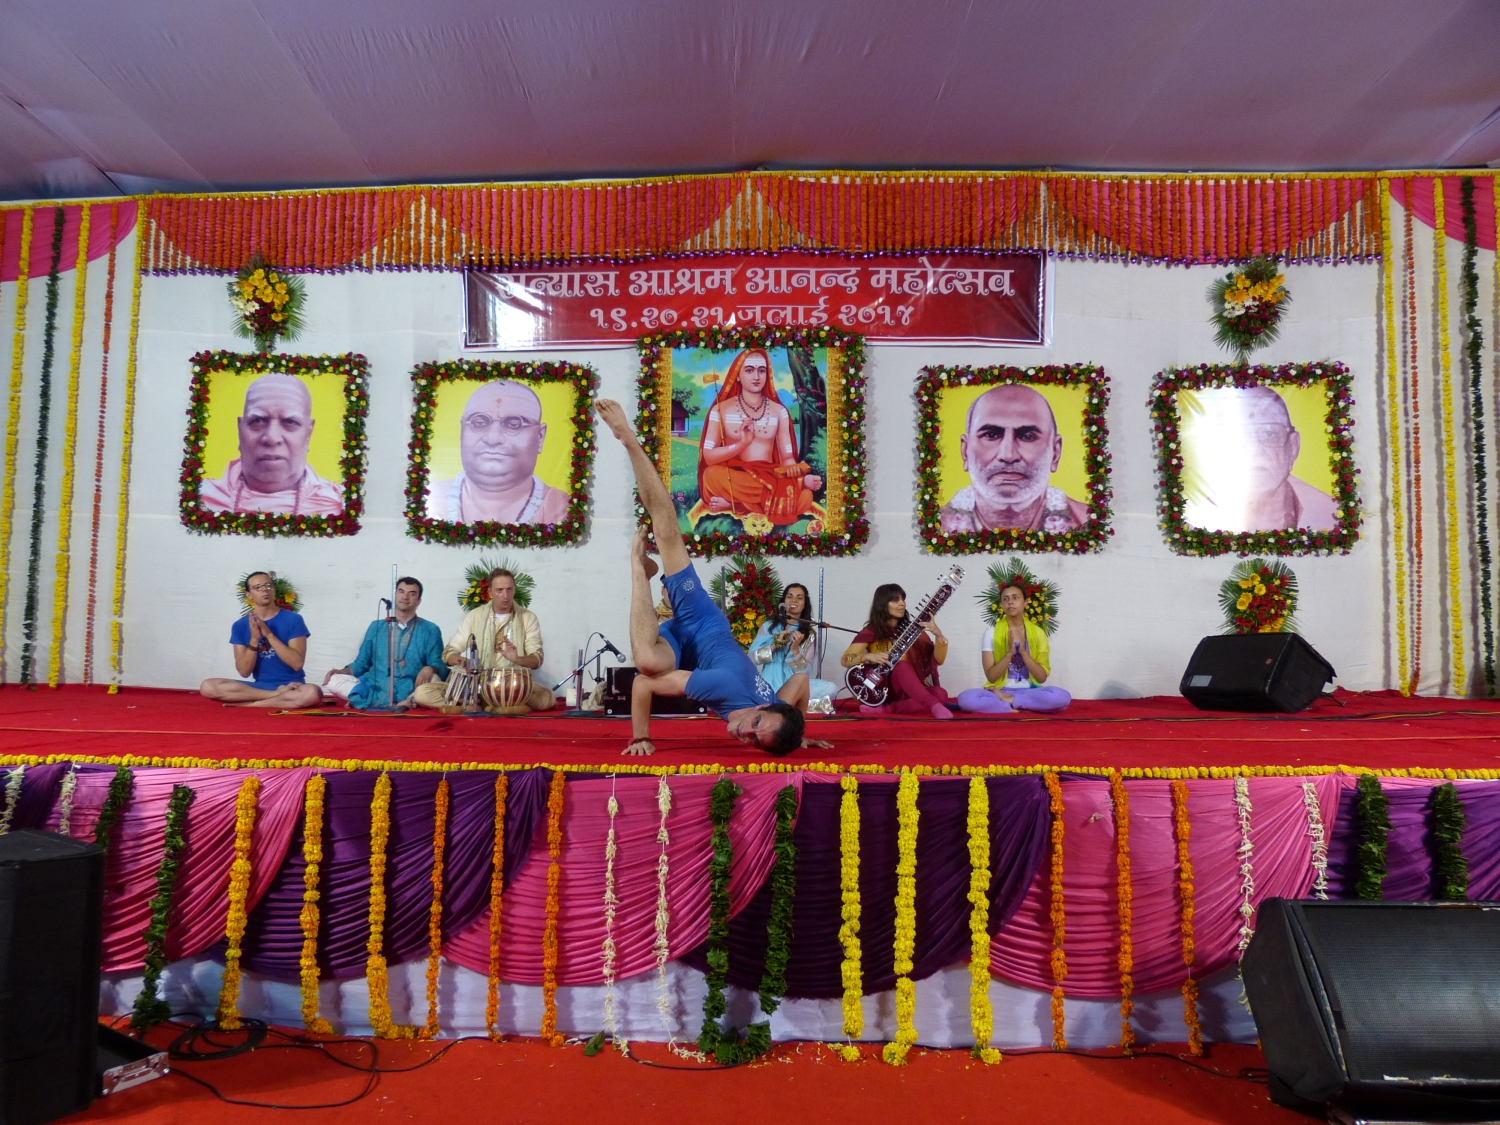 60º Aniversário de Mahá Mandaleshvara H.H. Vishveshvaránanda Giri Jí Mahá Rája - Sanyasa Áshrama, Mumbai, Índia - 2014, Julho